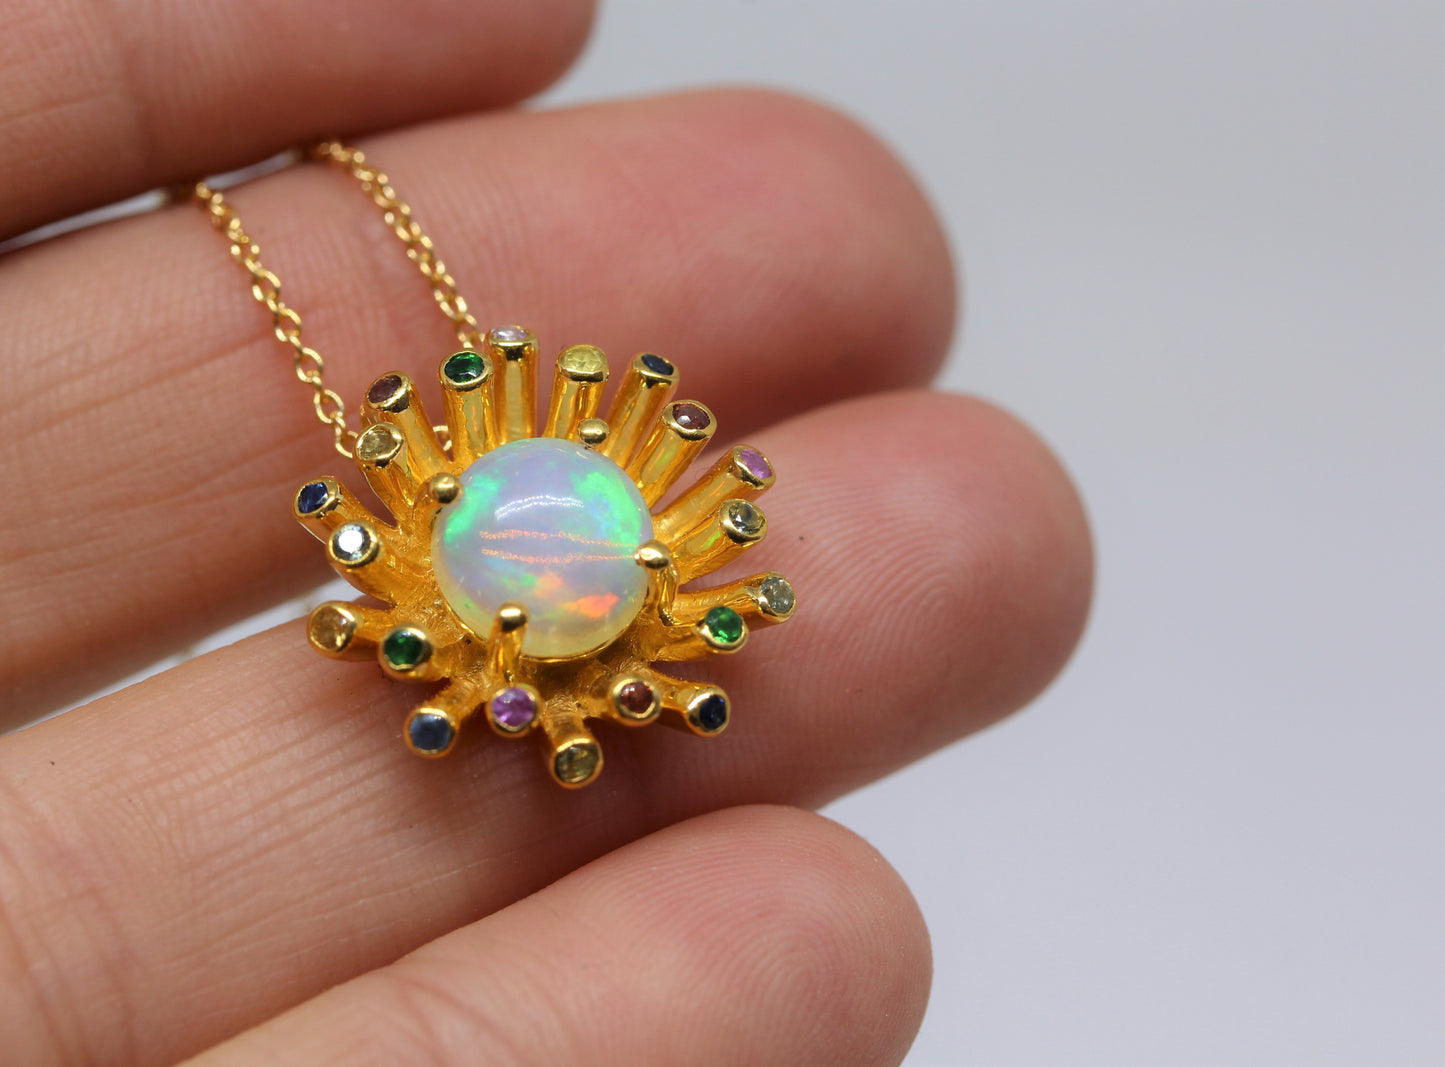 Starburst Opal Pendant- 24k Gold Plated - Gemstone Necklace #290